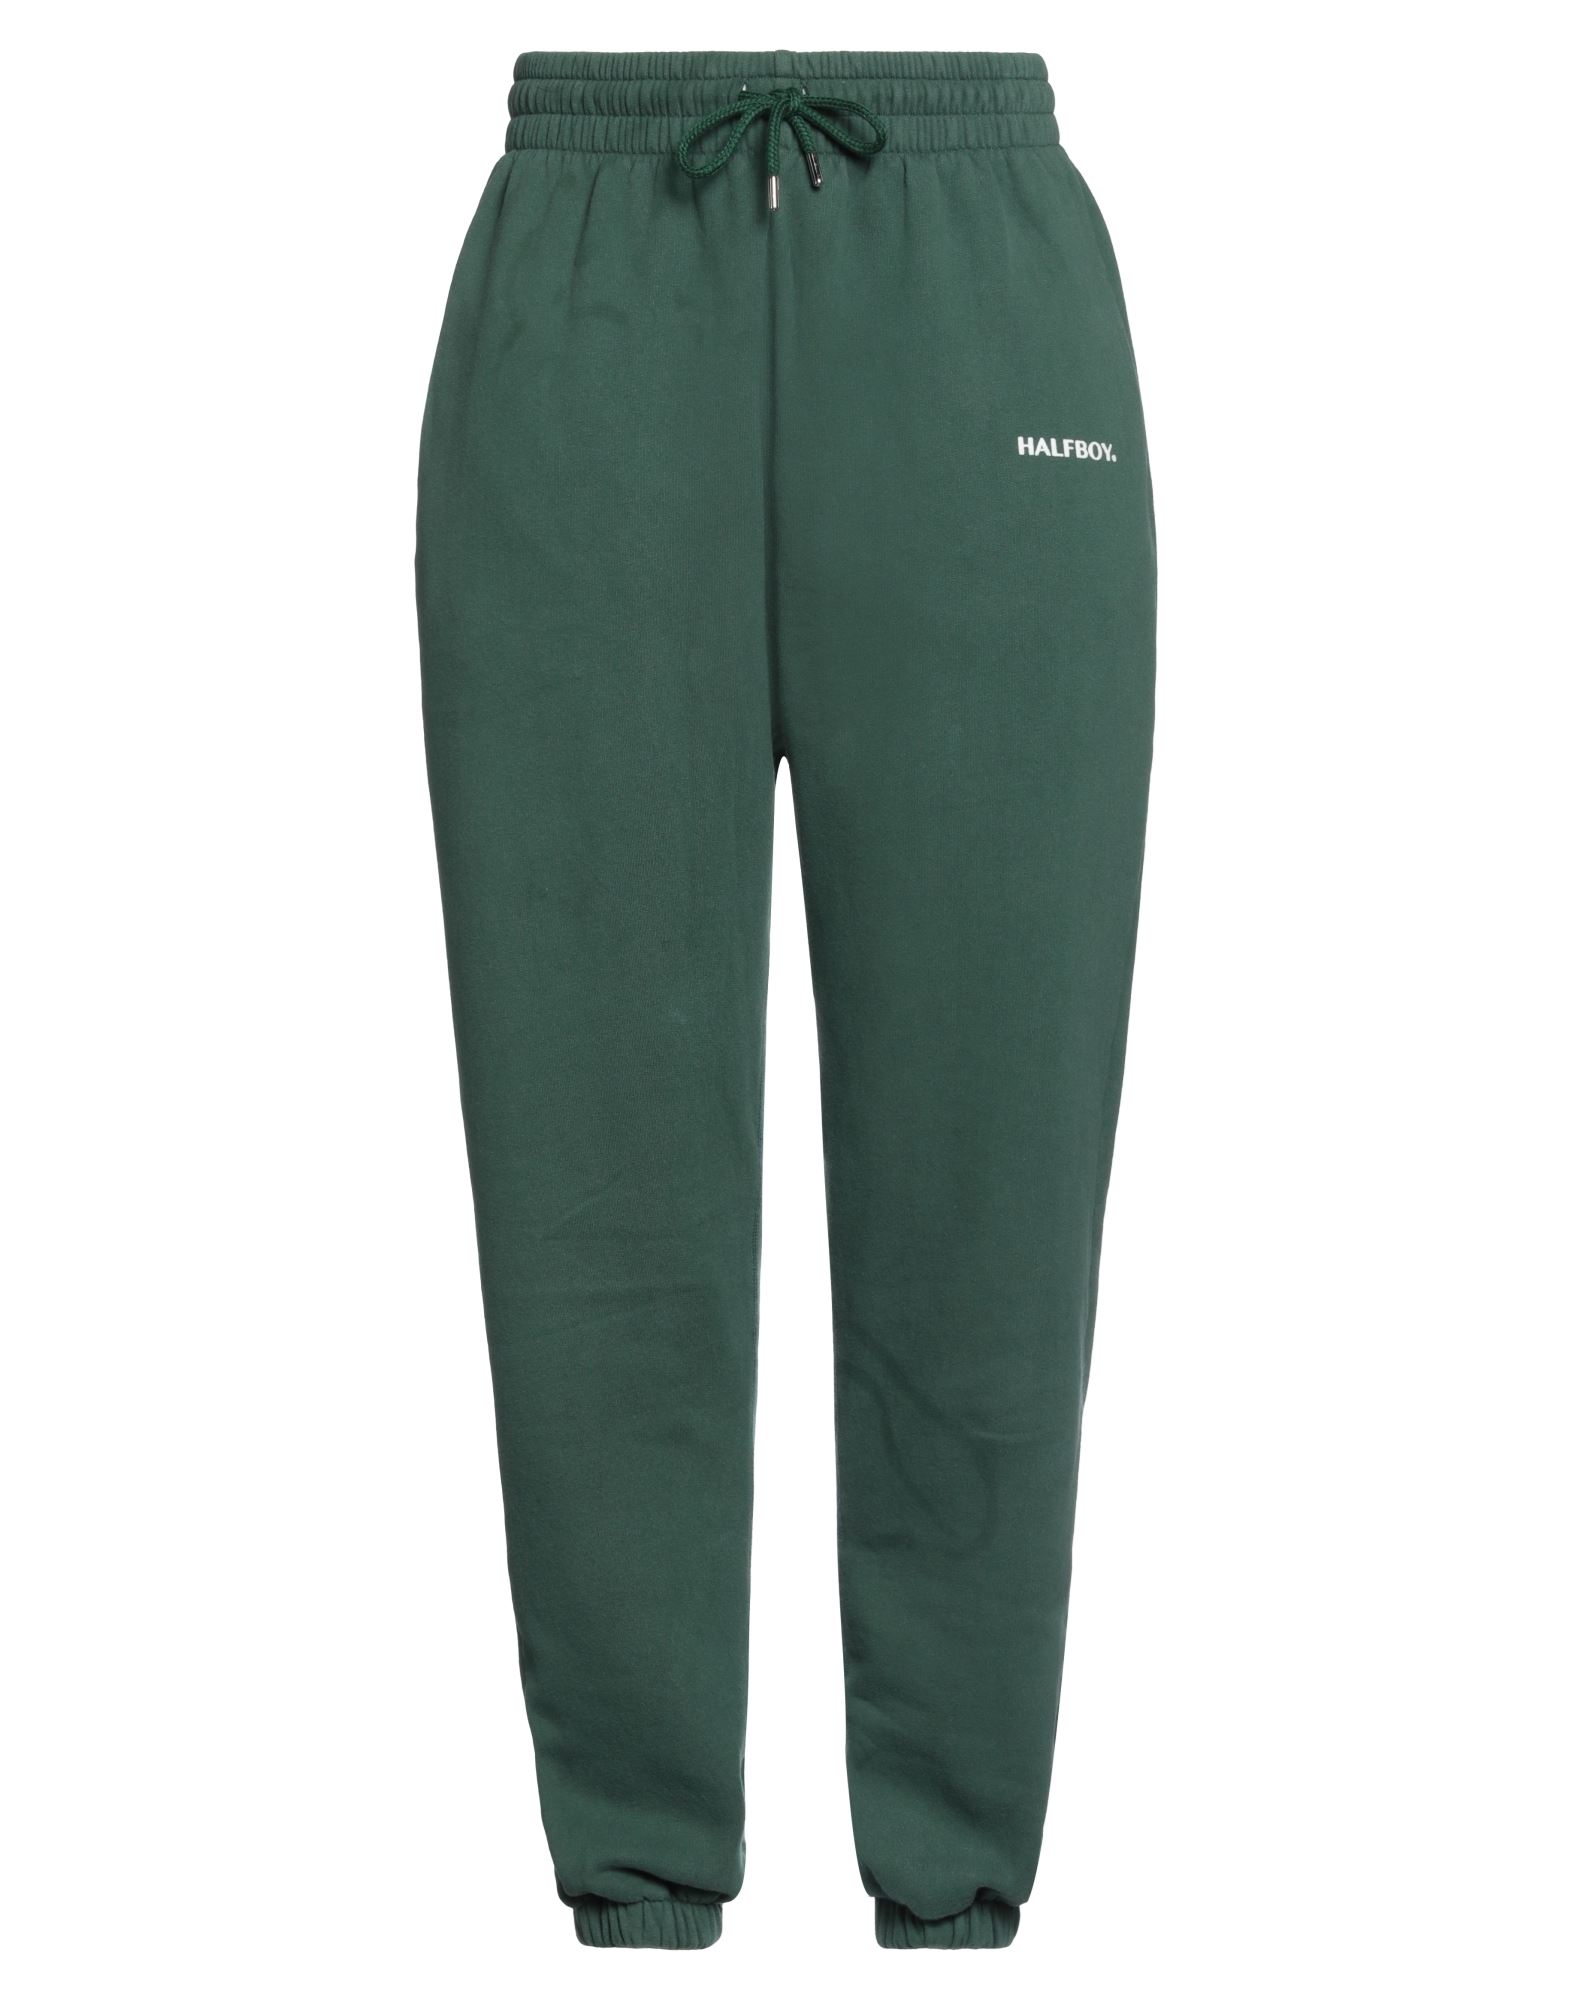 Halfboy Pants In Green